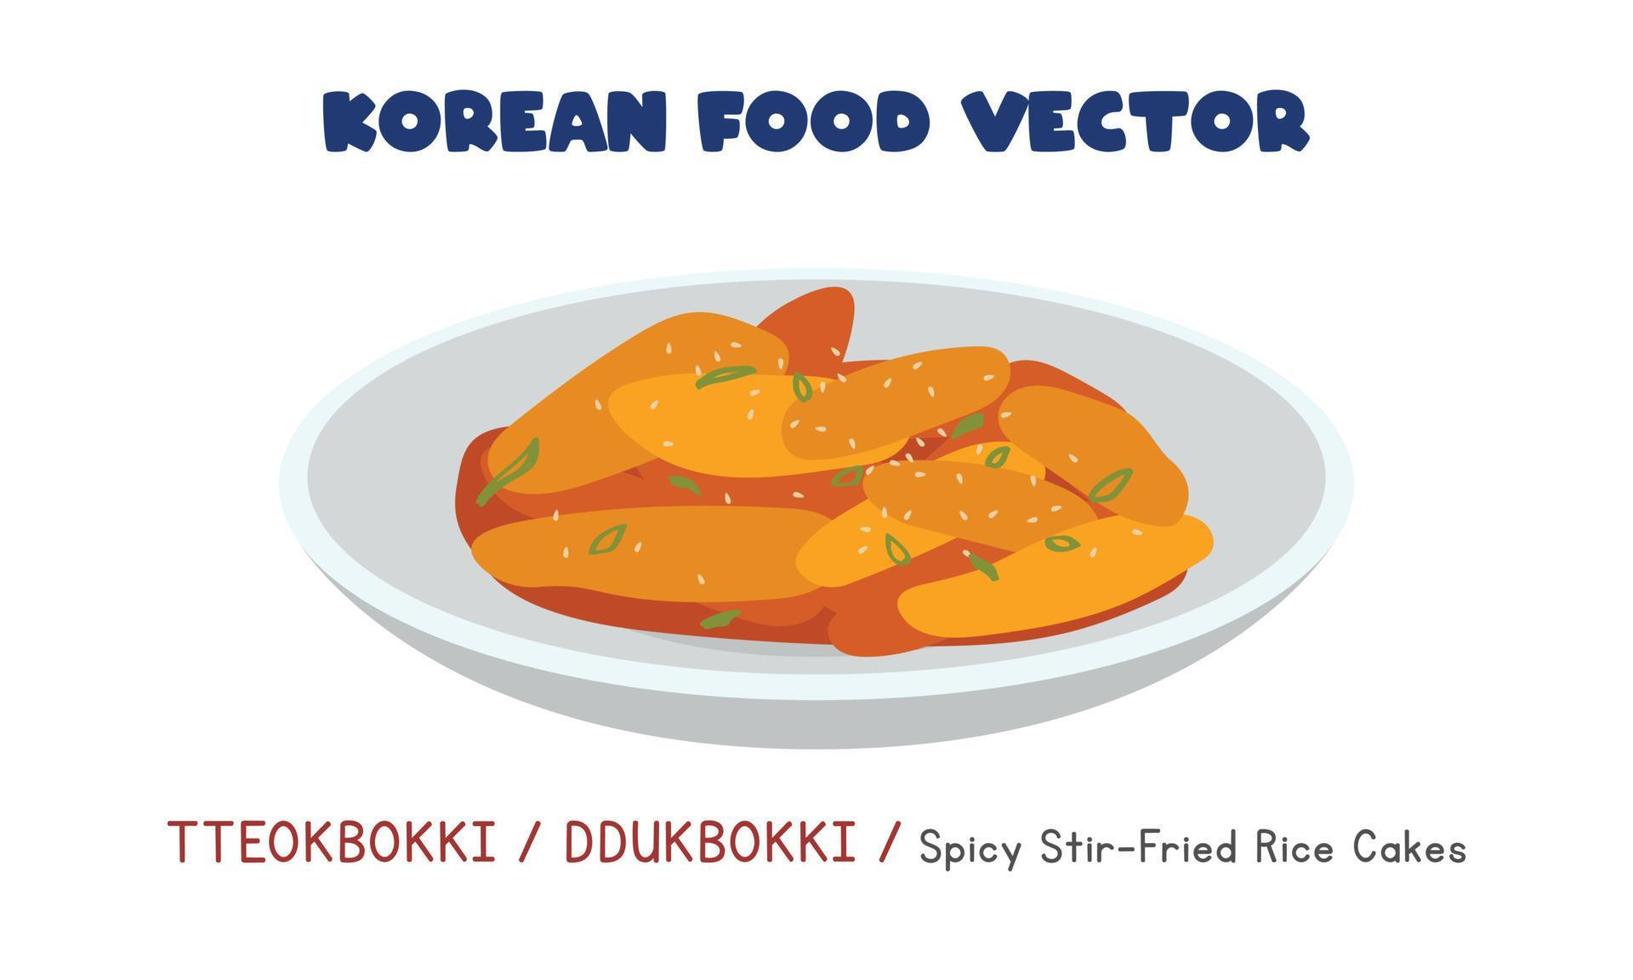 Korean Tteokbokki or Ddukbokki - Spicy Stir-fried Rice Cakes flat vector  design illustration, clipart cartoon style. Asian food. Korean cuisine. Korean food